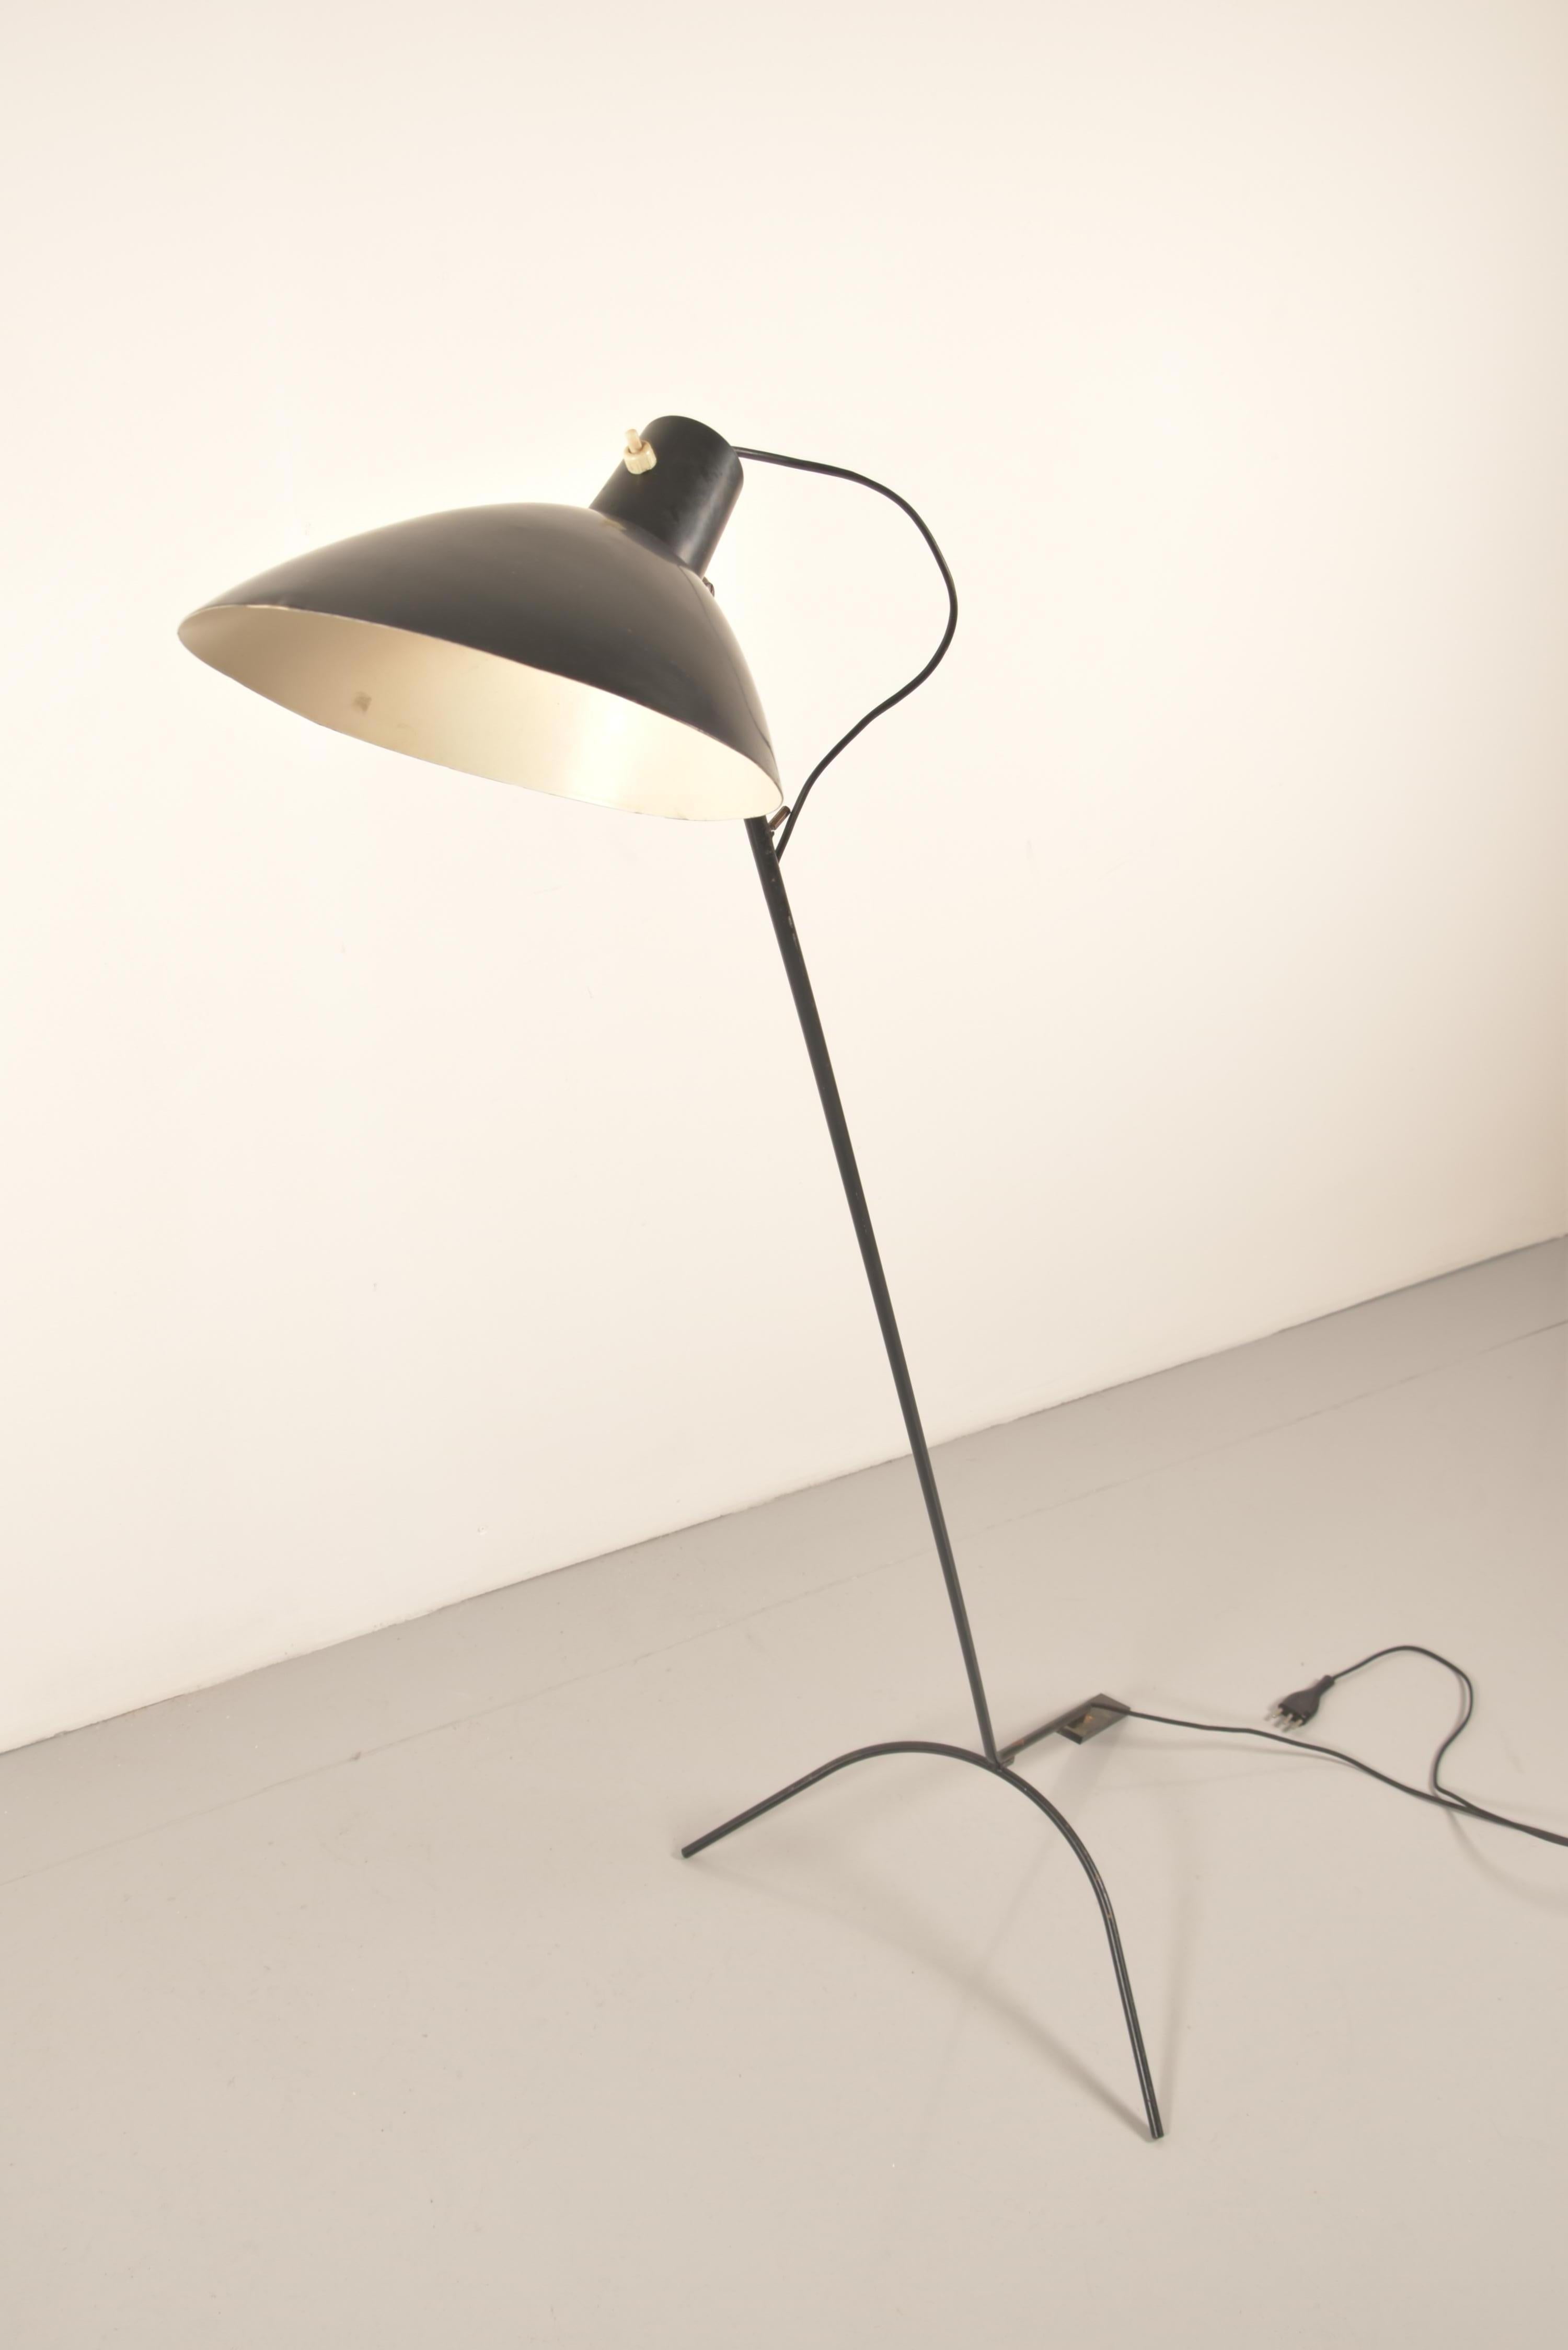 Vittoriano Vigano for Arteluce Rare Italian Floor Lamp Model 1047 For Sale 3